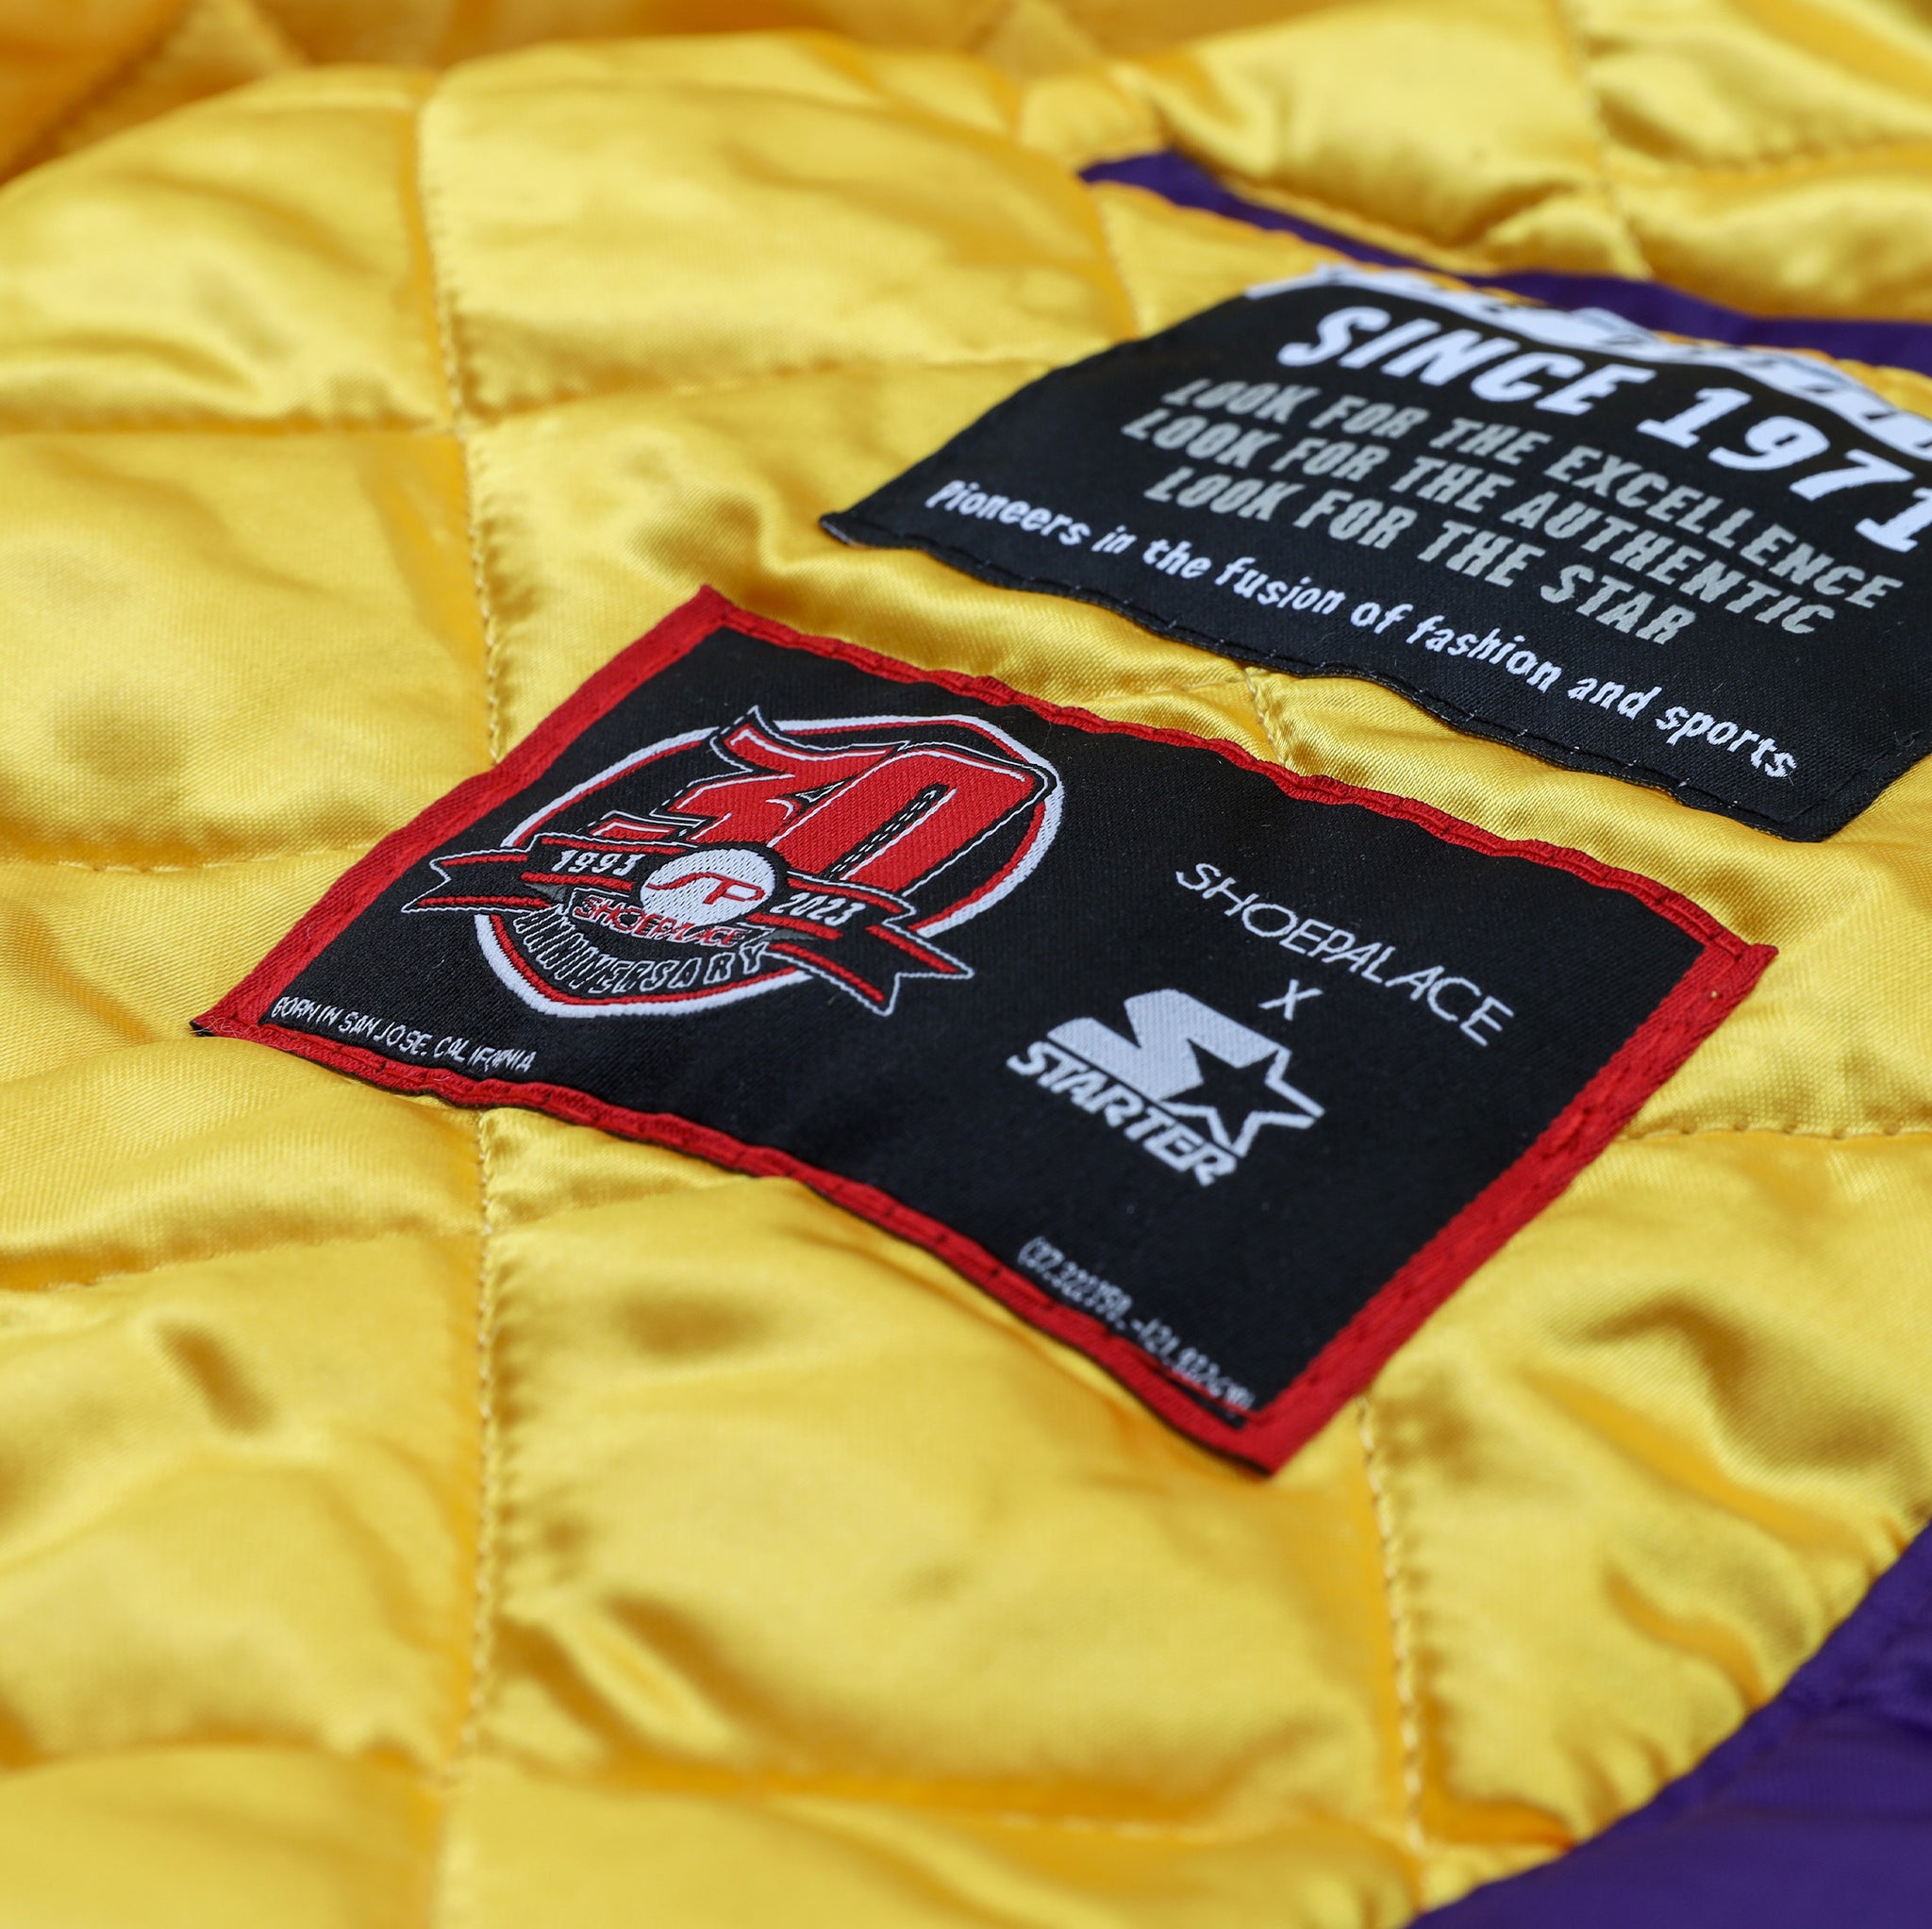 Los Angeles Lakers Half Court Jacket - Black/Purple - ShopperBoard